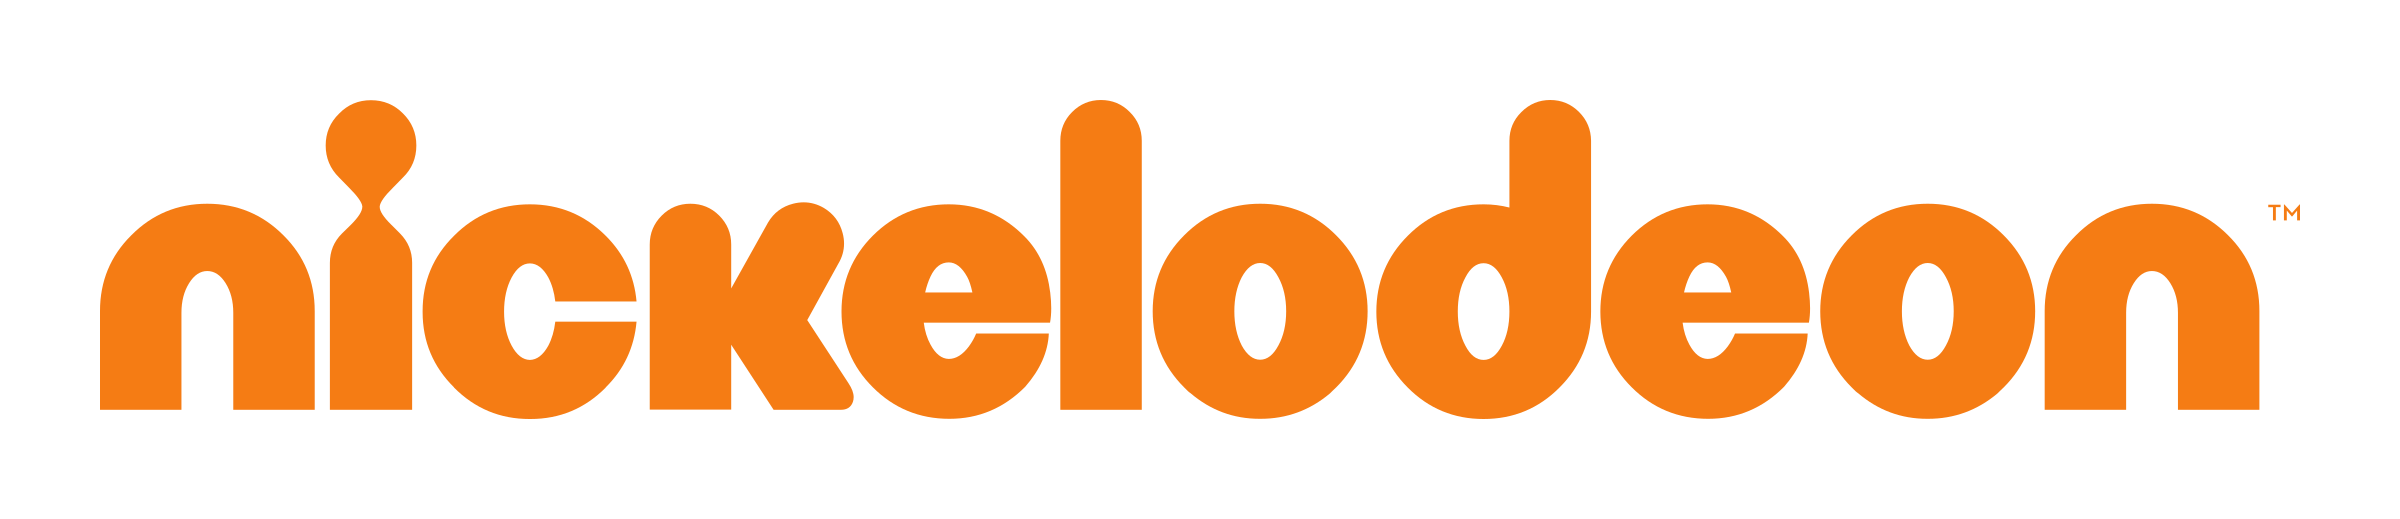 nickelodeon-logo-png-transparent